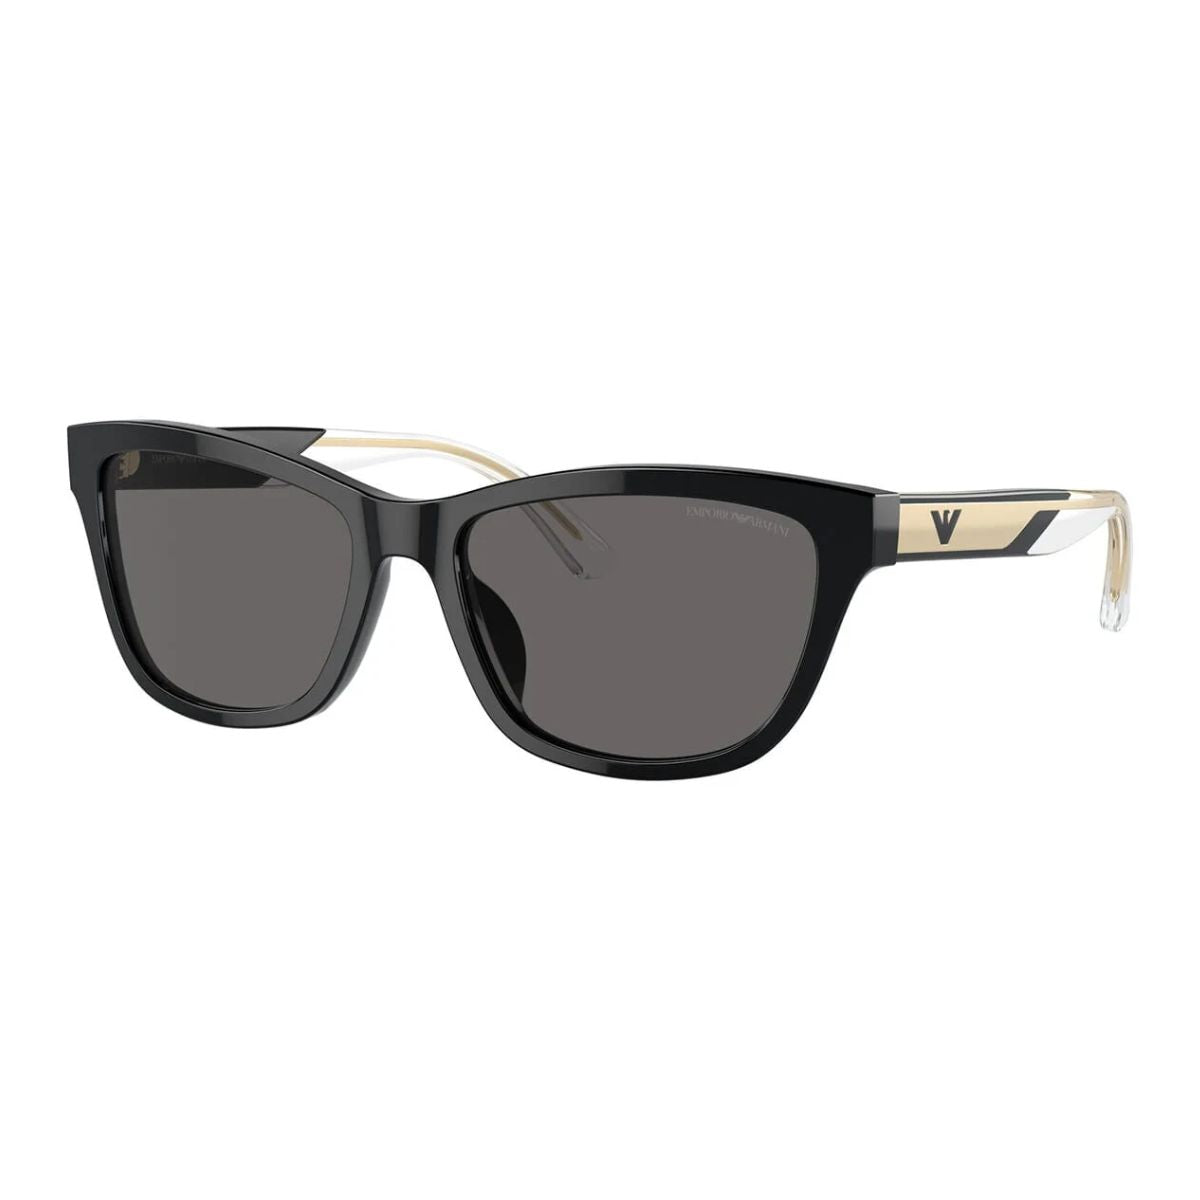 "Buy Latest Emporio Armani Black Color Cat Eye Sunglasses For Women's | Optroium"